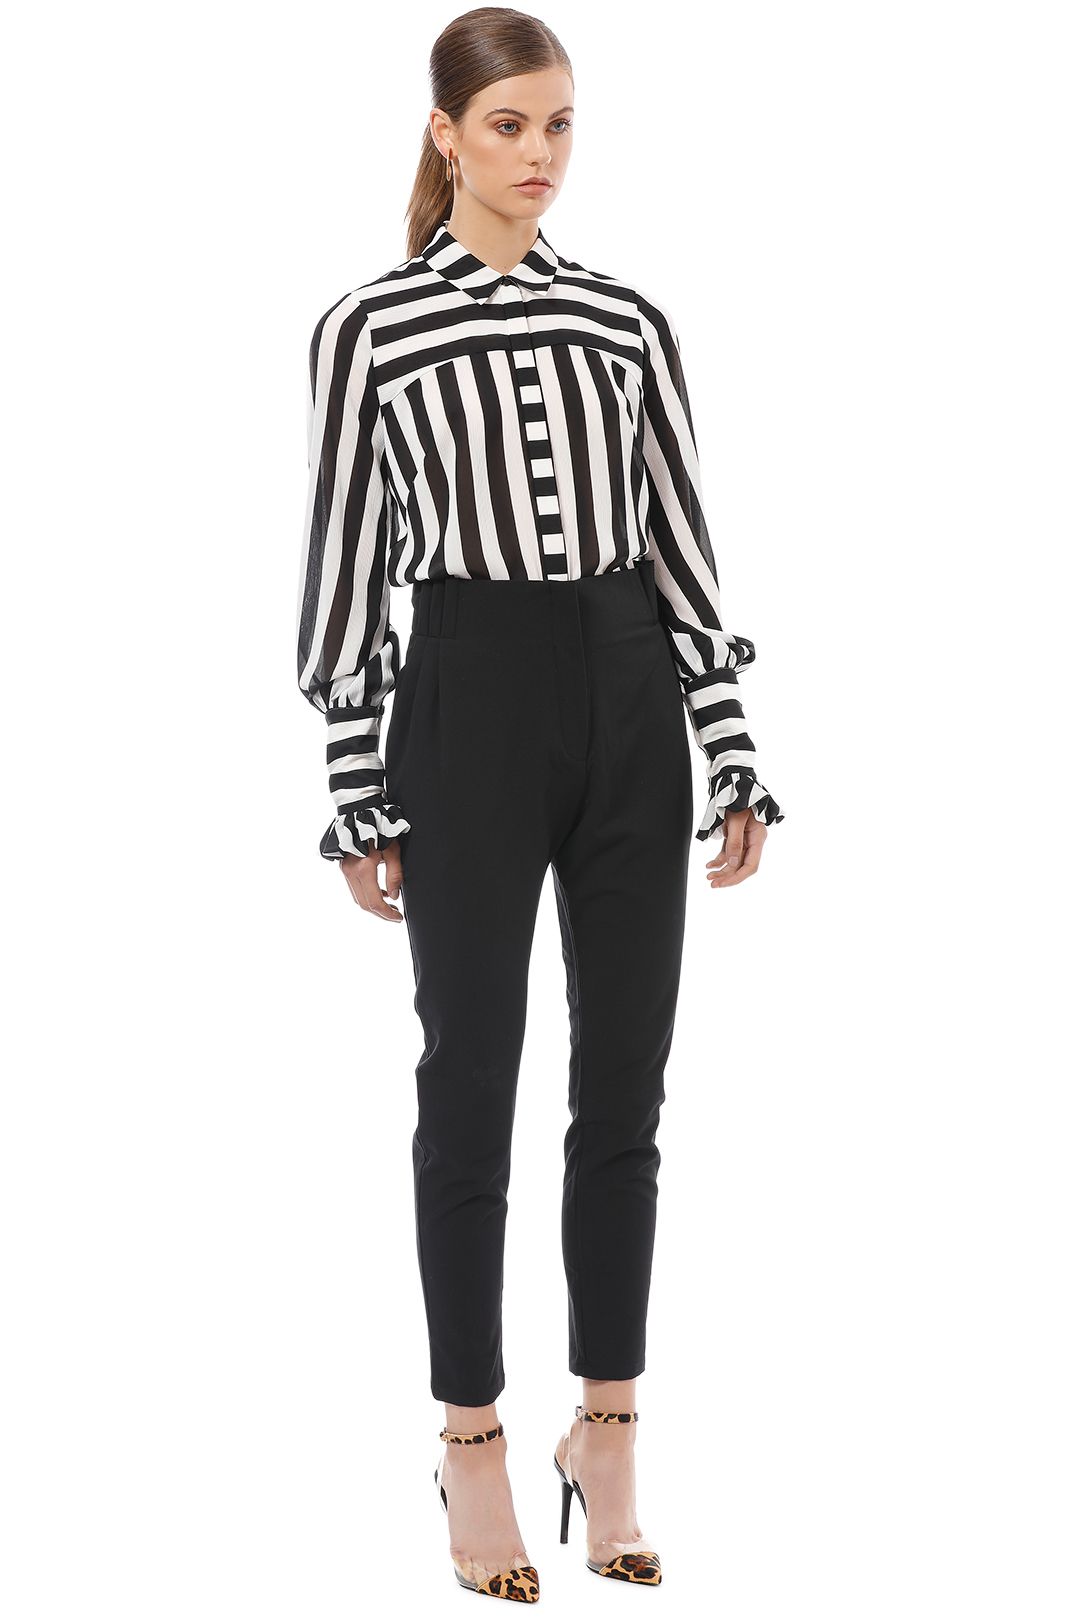 Cue - Bold Stripe Crinkle Georgette Shirt - Black White - Side